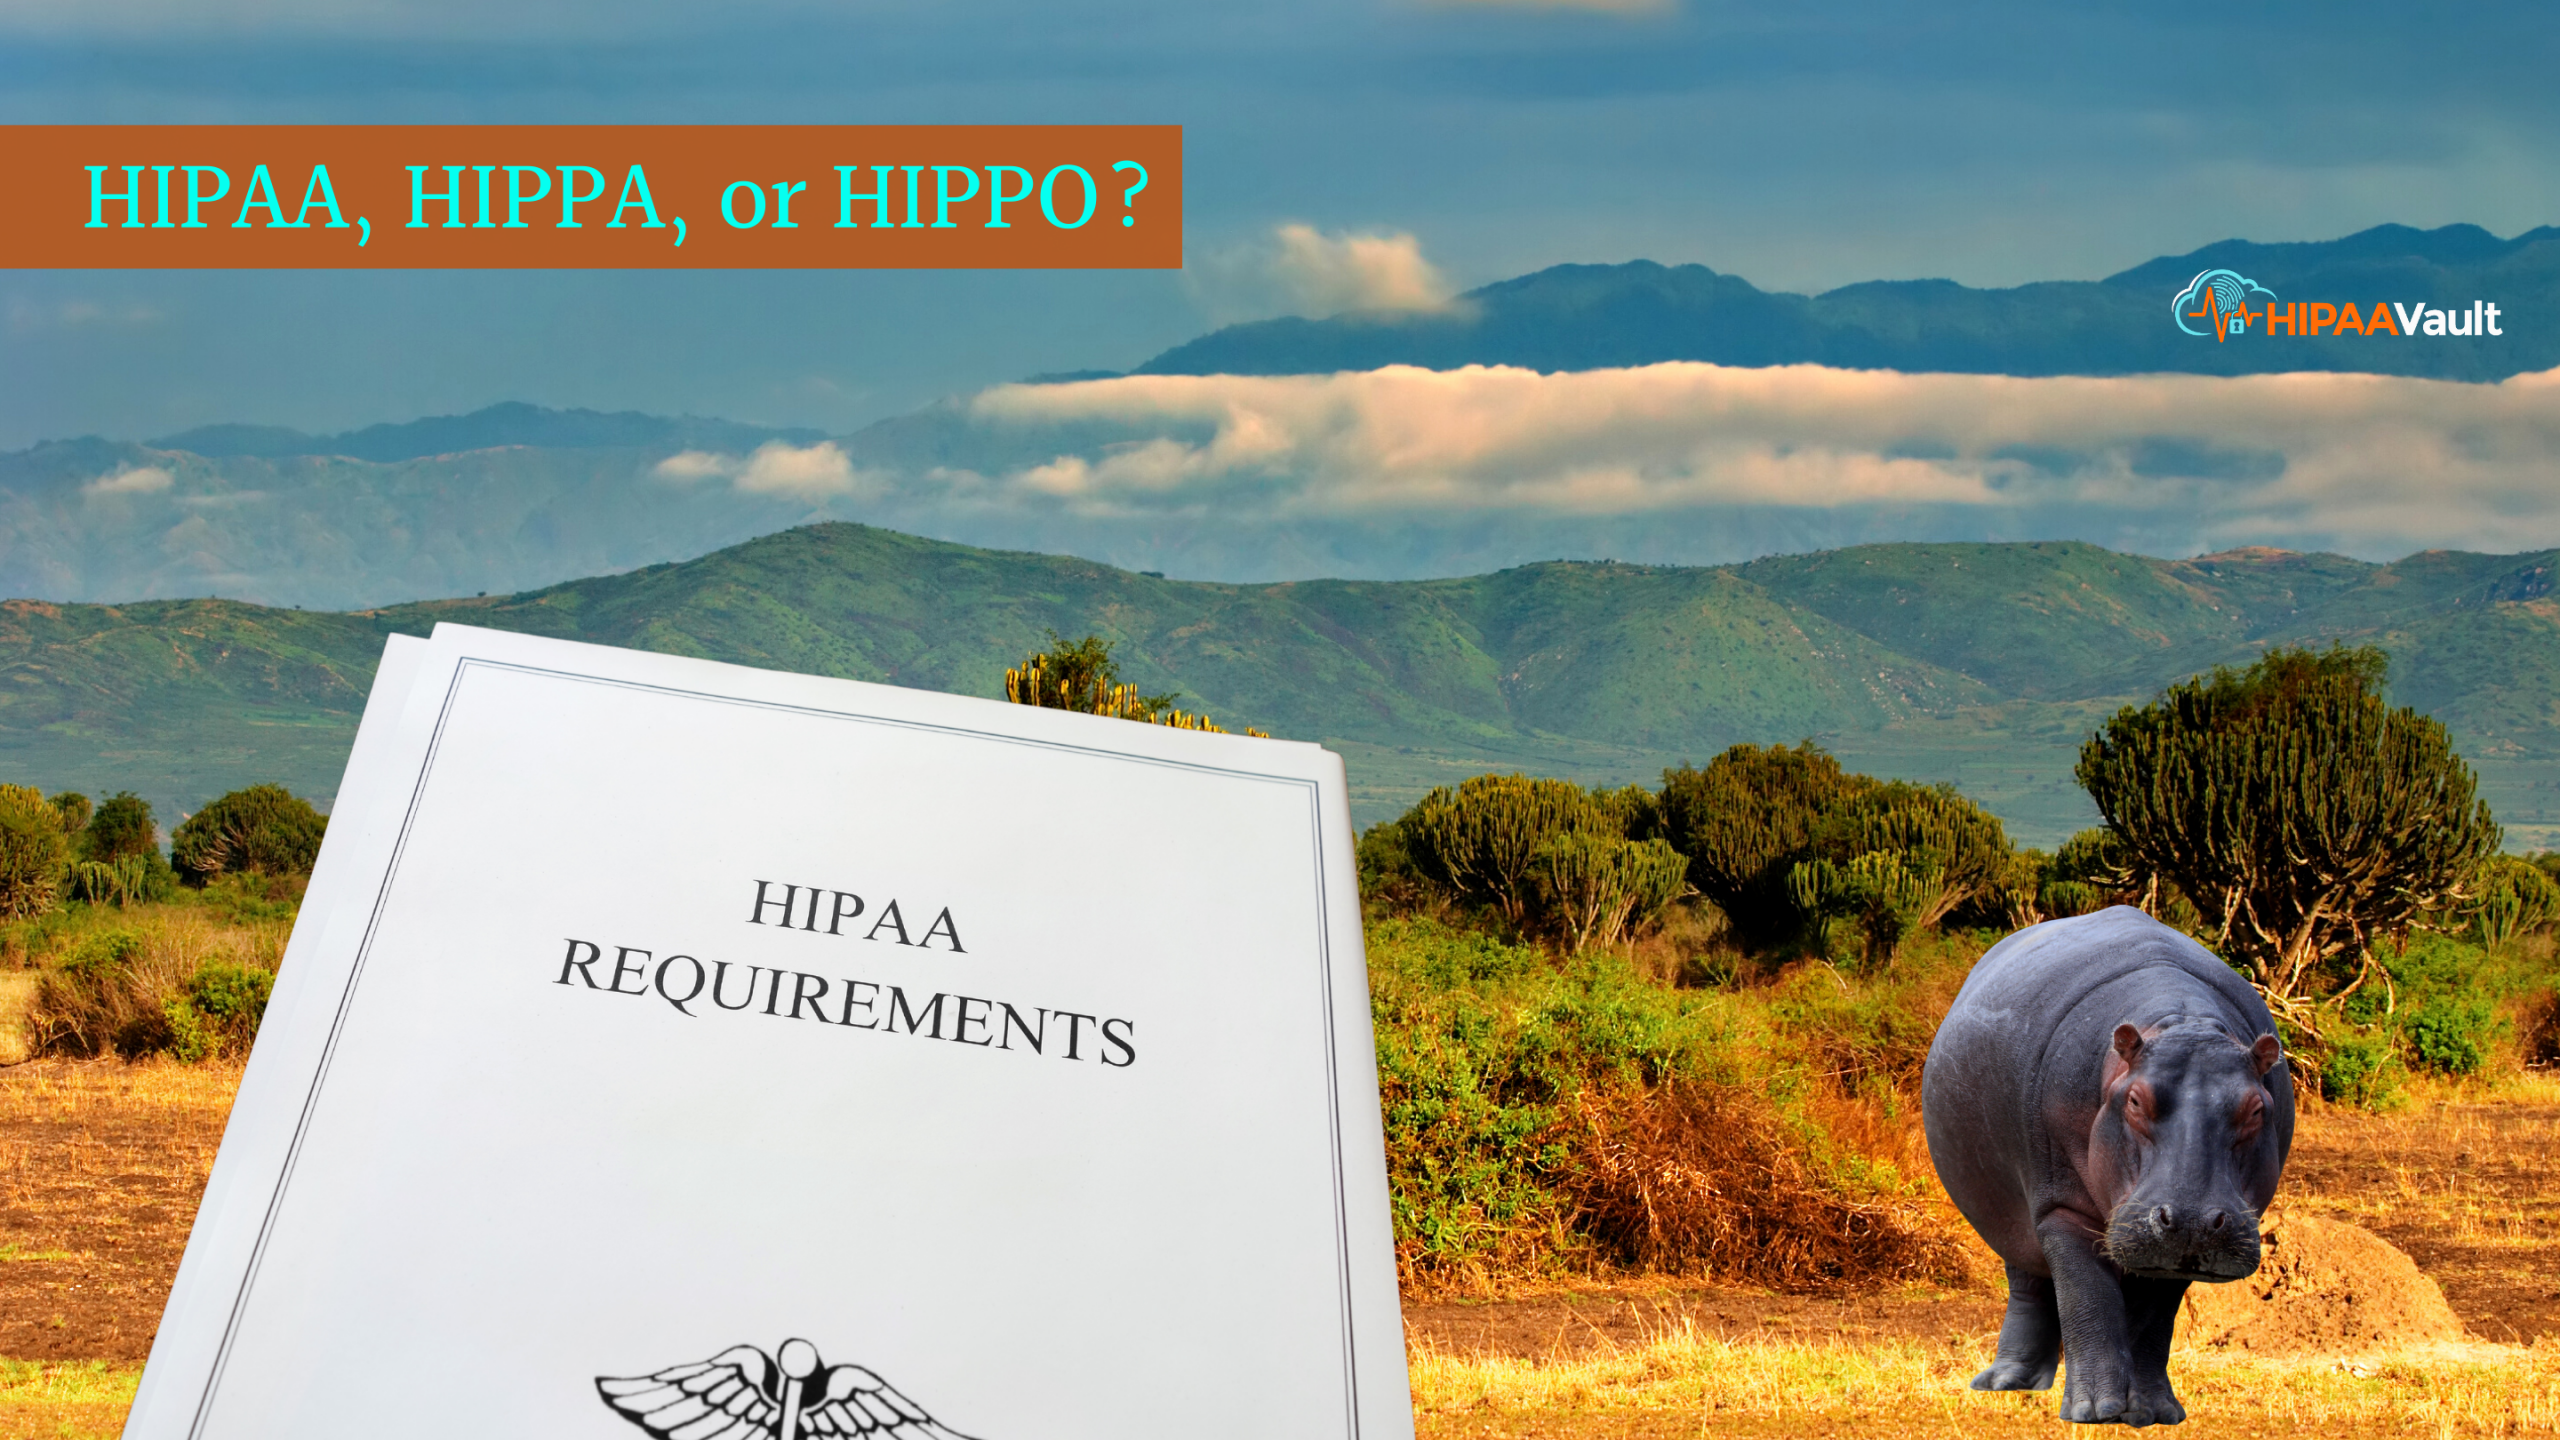 HIPAA, HIPPA, or HIPPO?